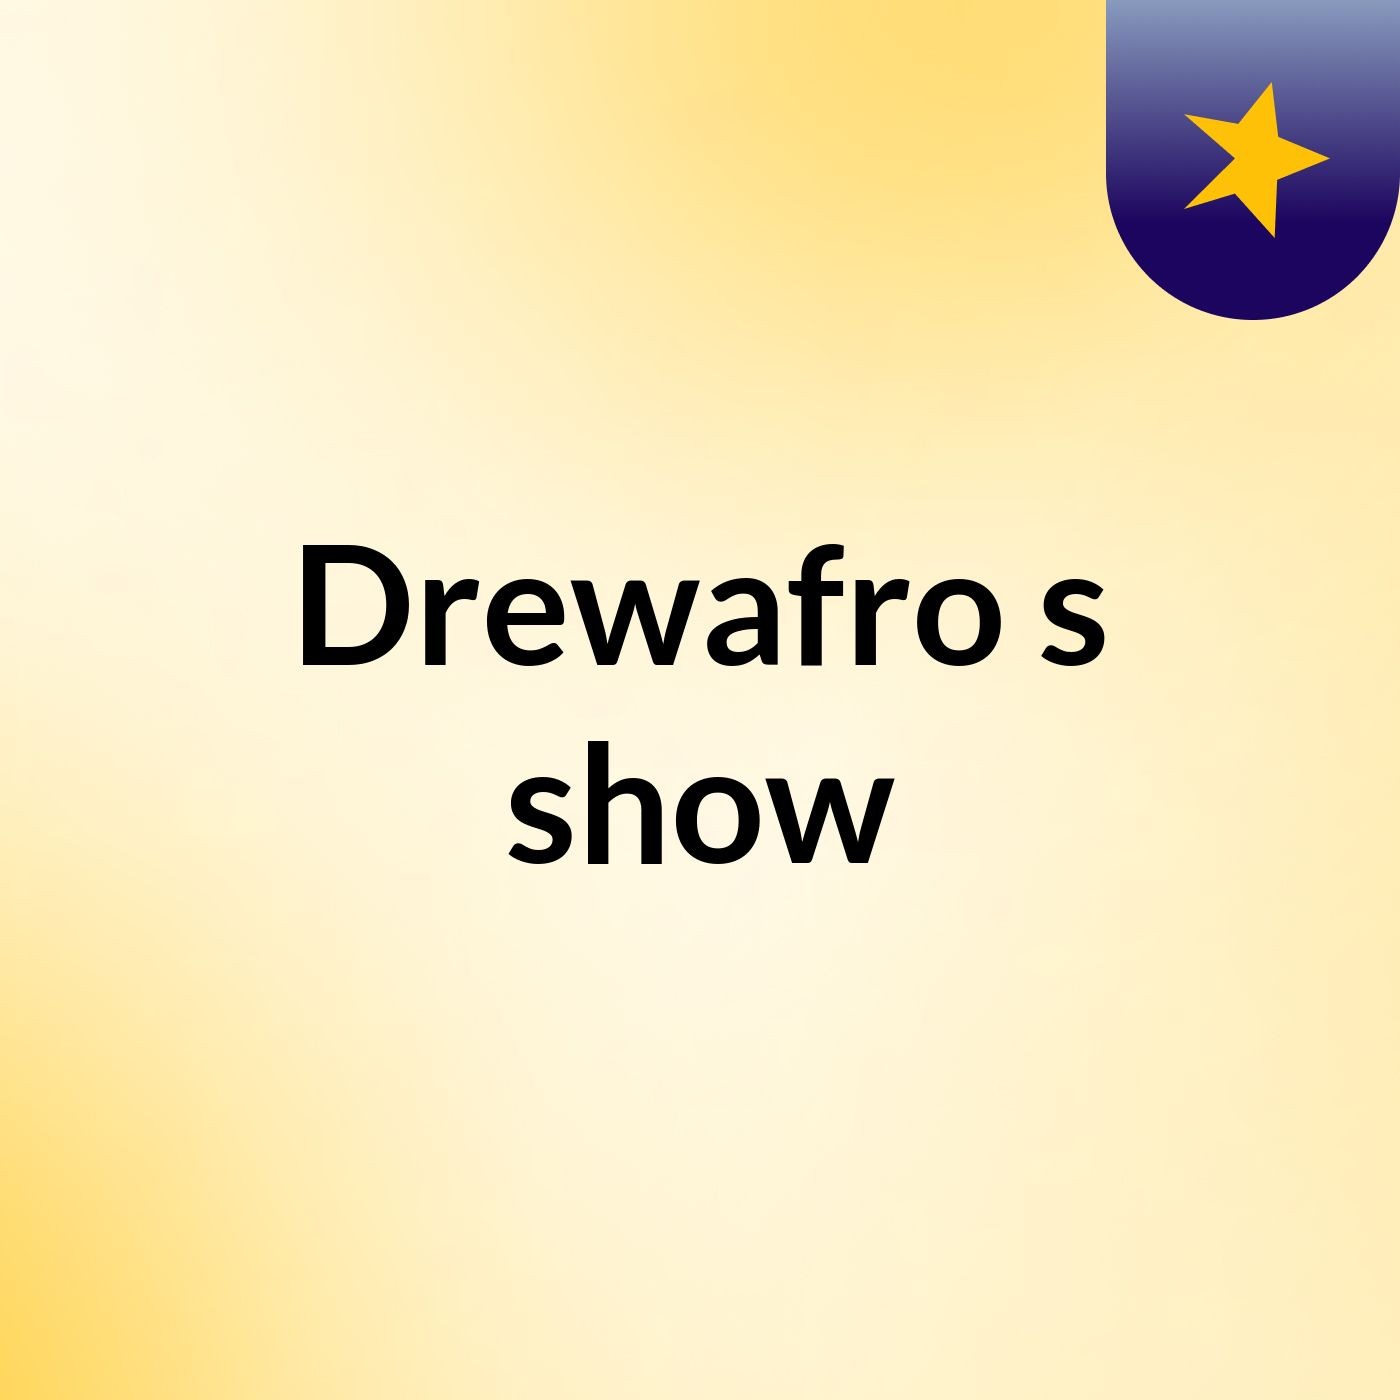 Drewafro's show